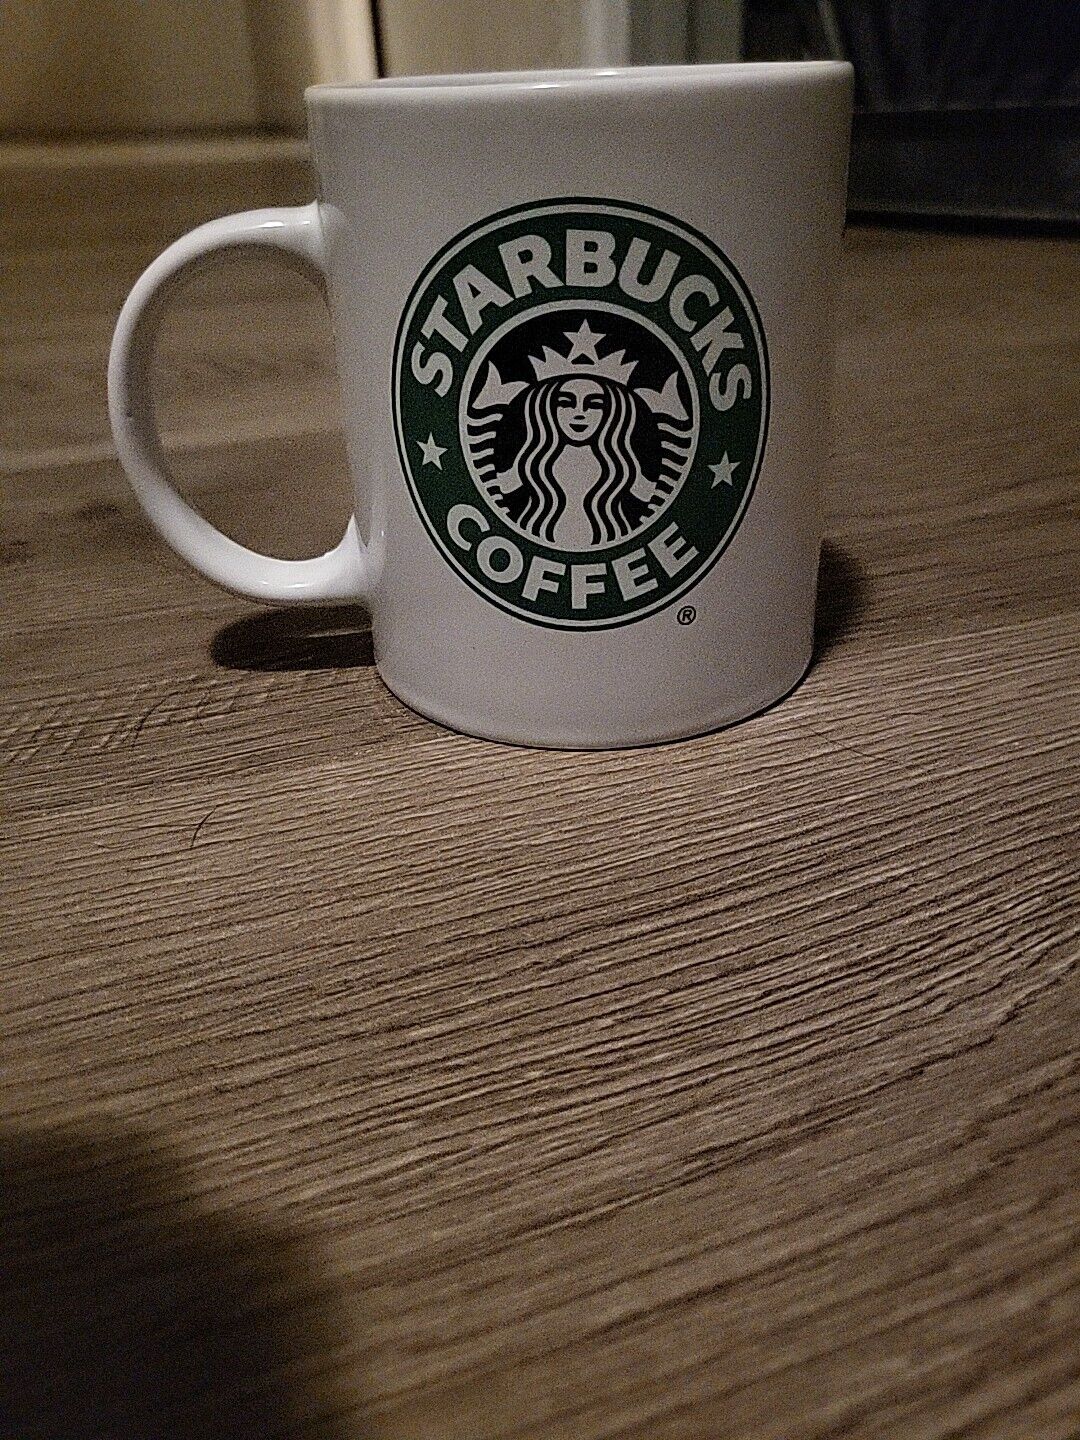 Starbucks Coffee Cup Mug 2008 Mermaid Siren Logo White Green 11.5 oz